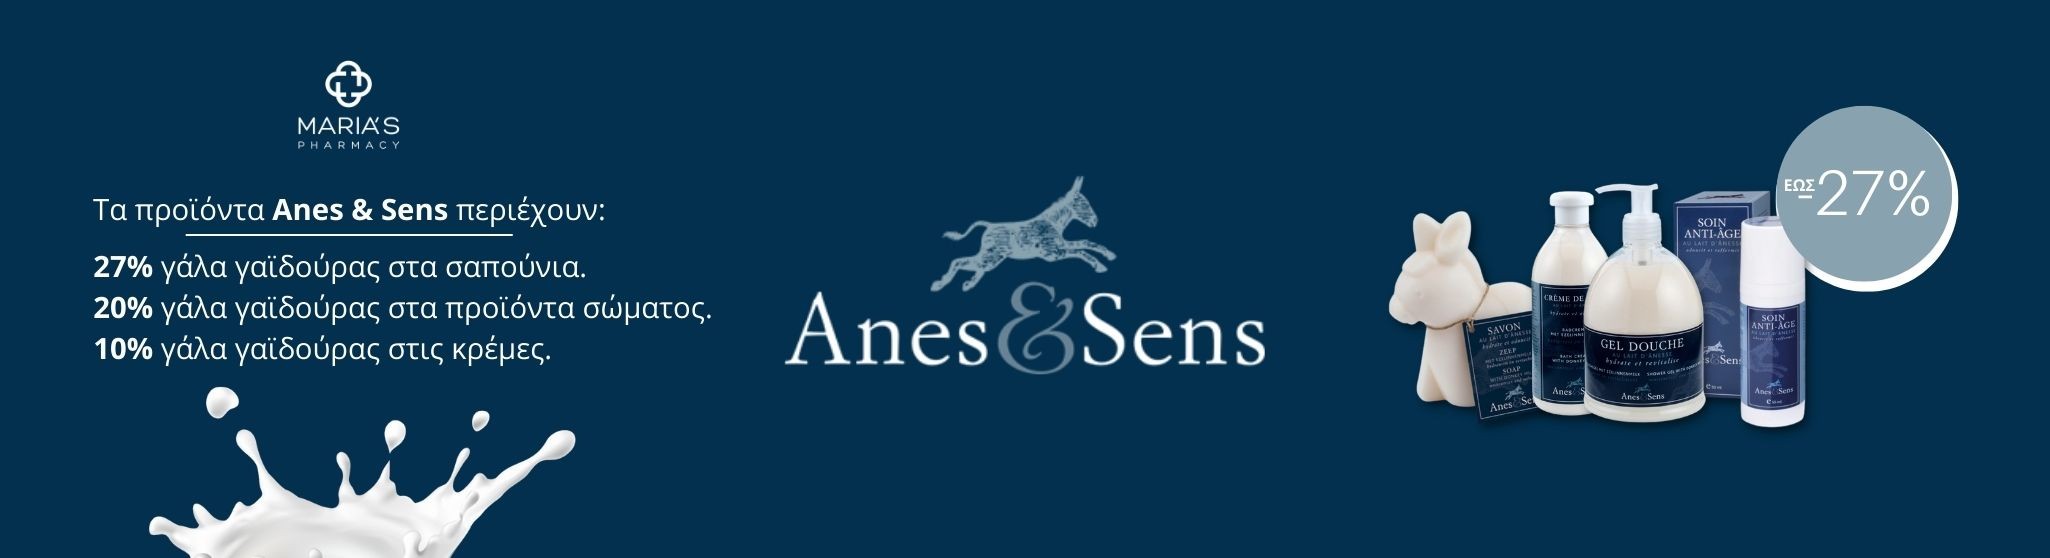 ANES & SENS - Κατάλογος προϊόντων εκπτώσεις